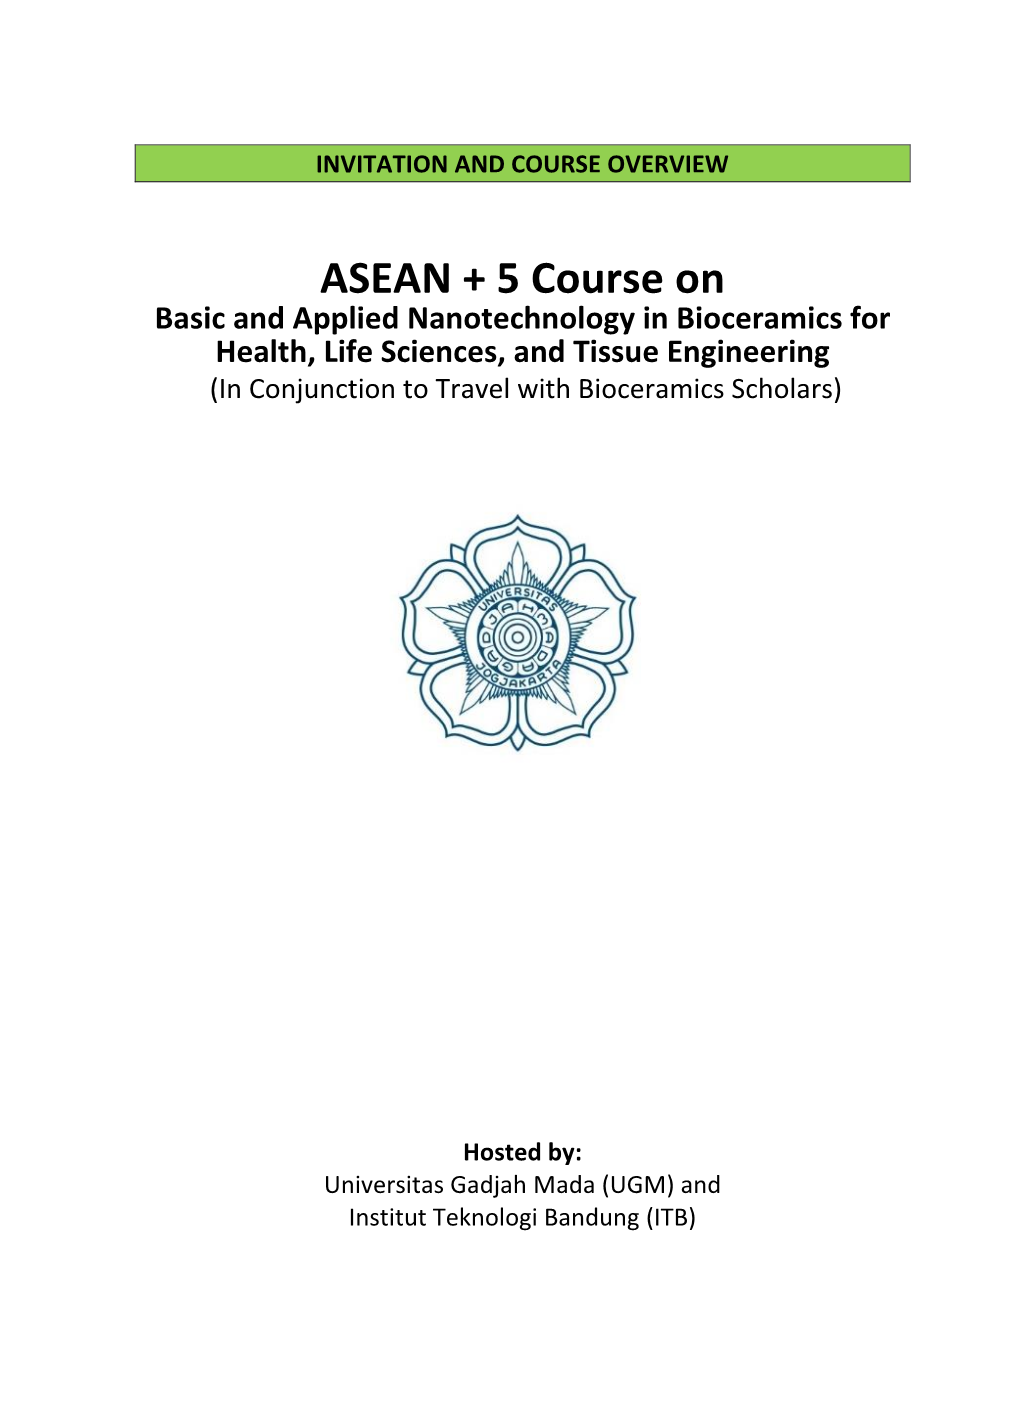 ASEAN + 5 Course On